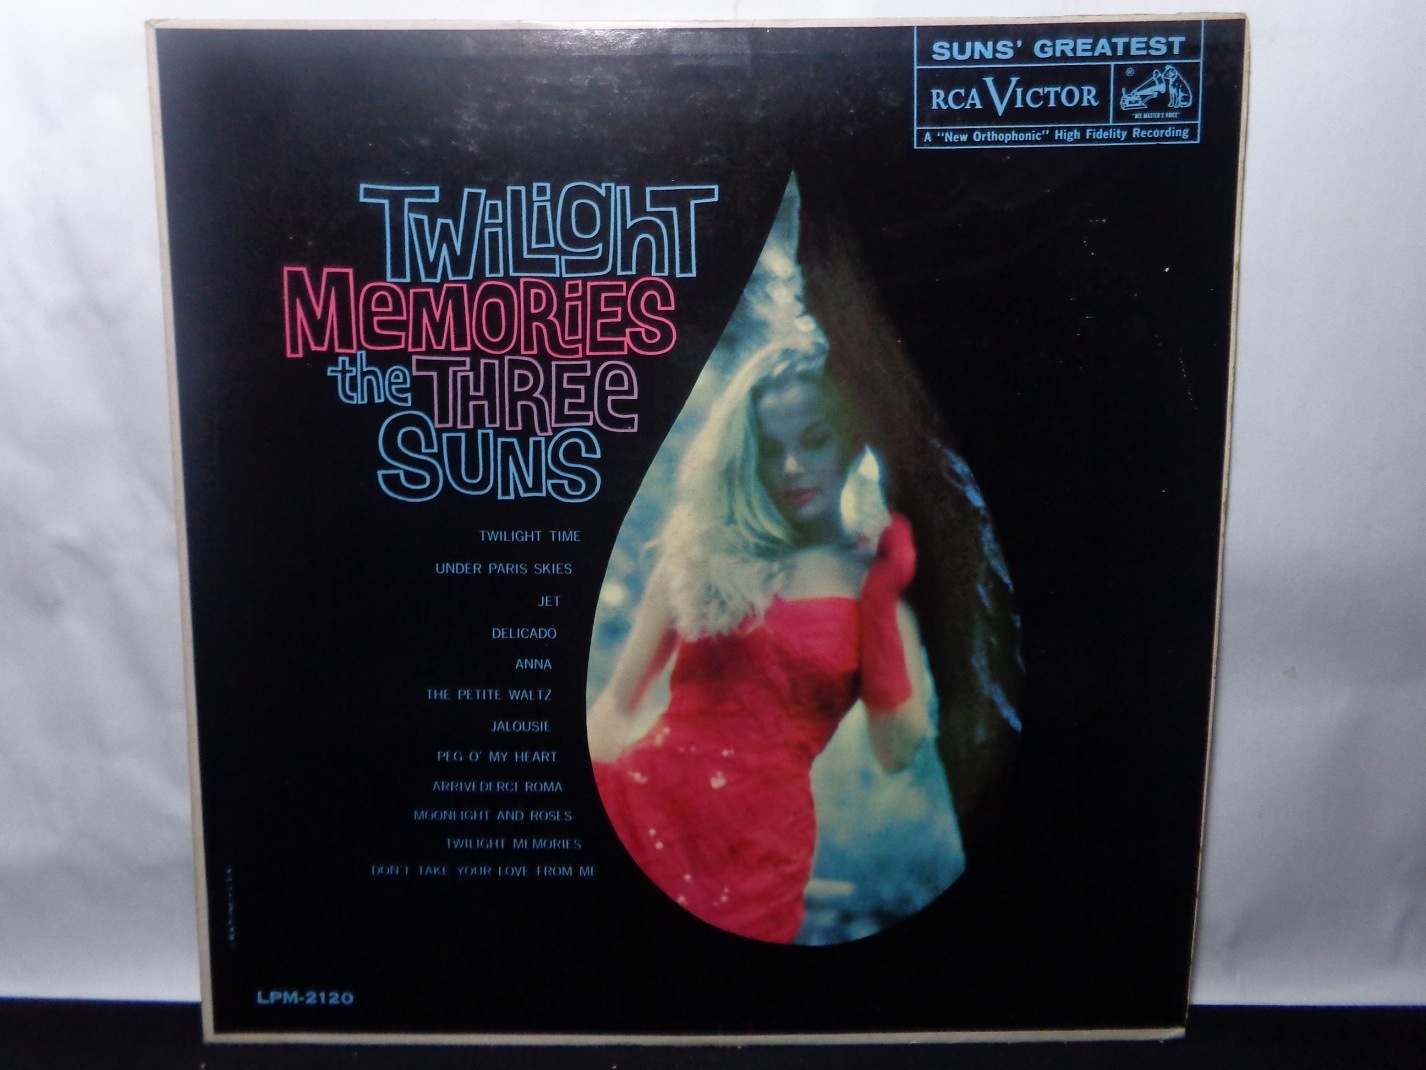 Vinil - Three Suns the - Twilight Memories (USA)